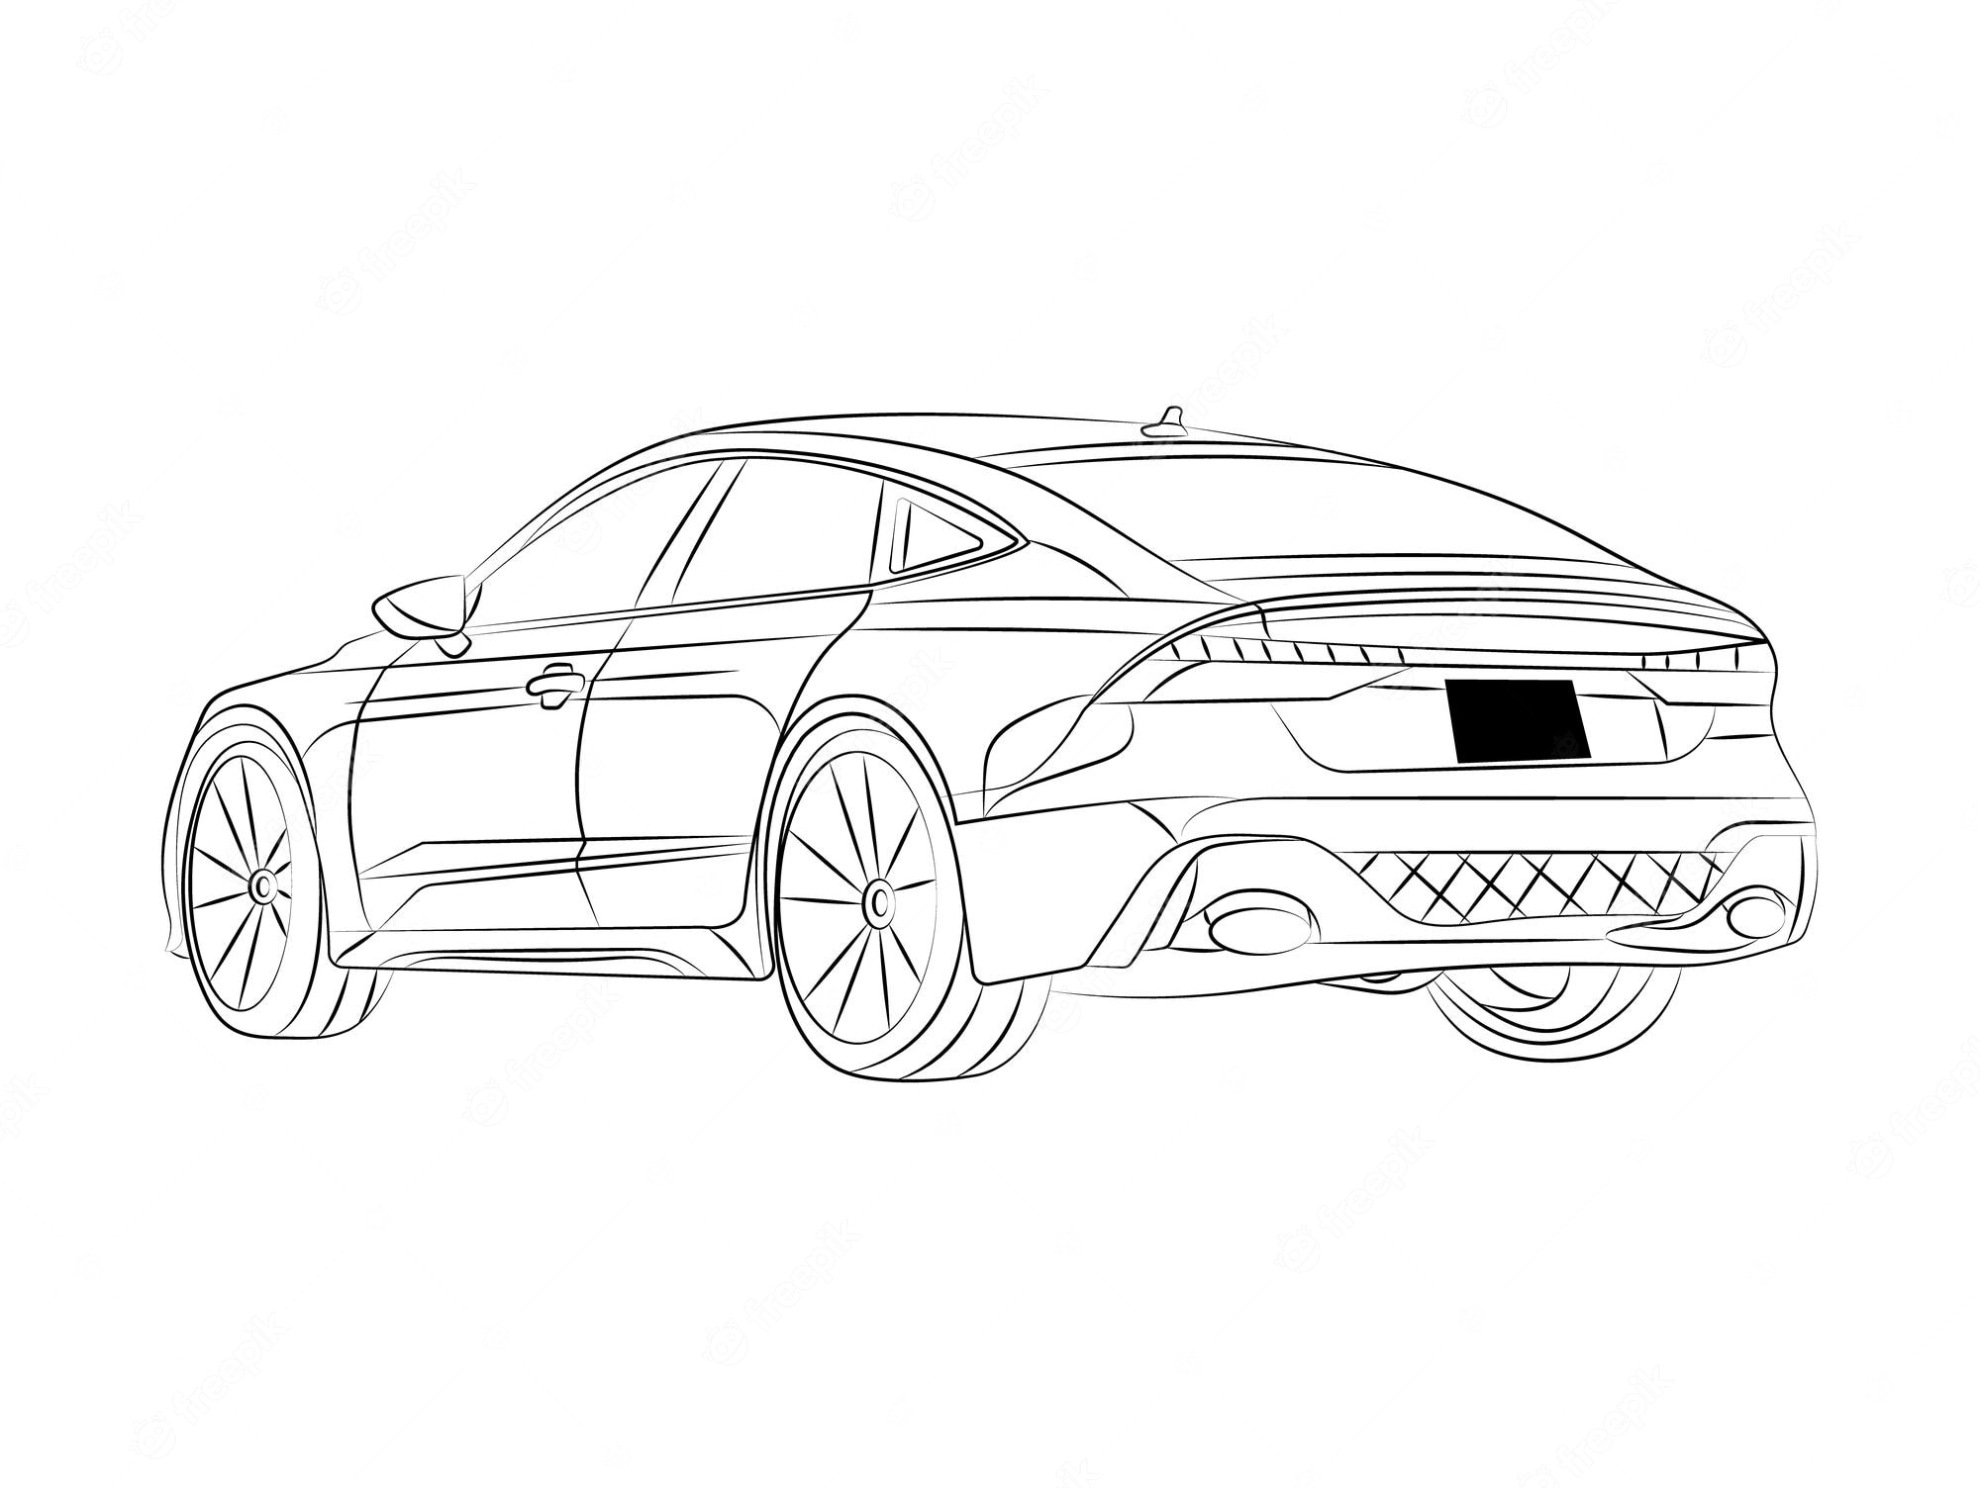 Kleurplaat Audi A8